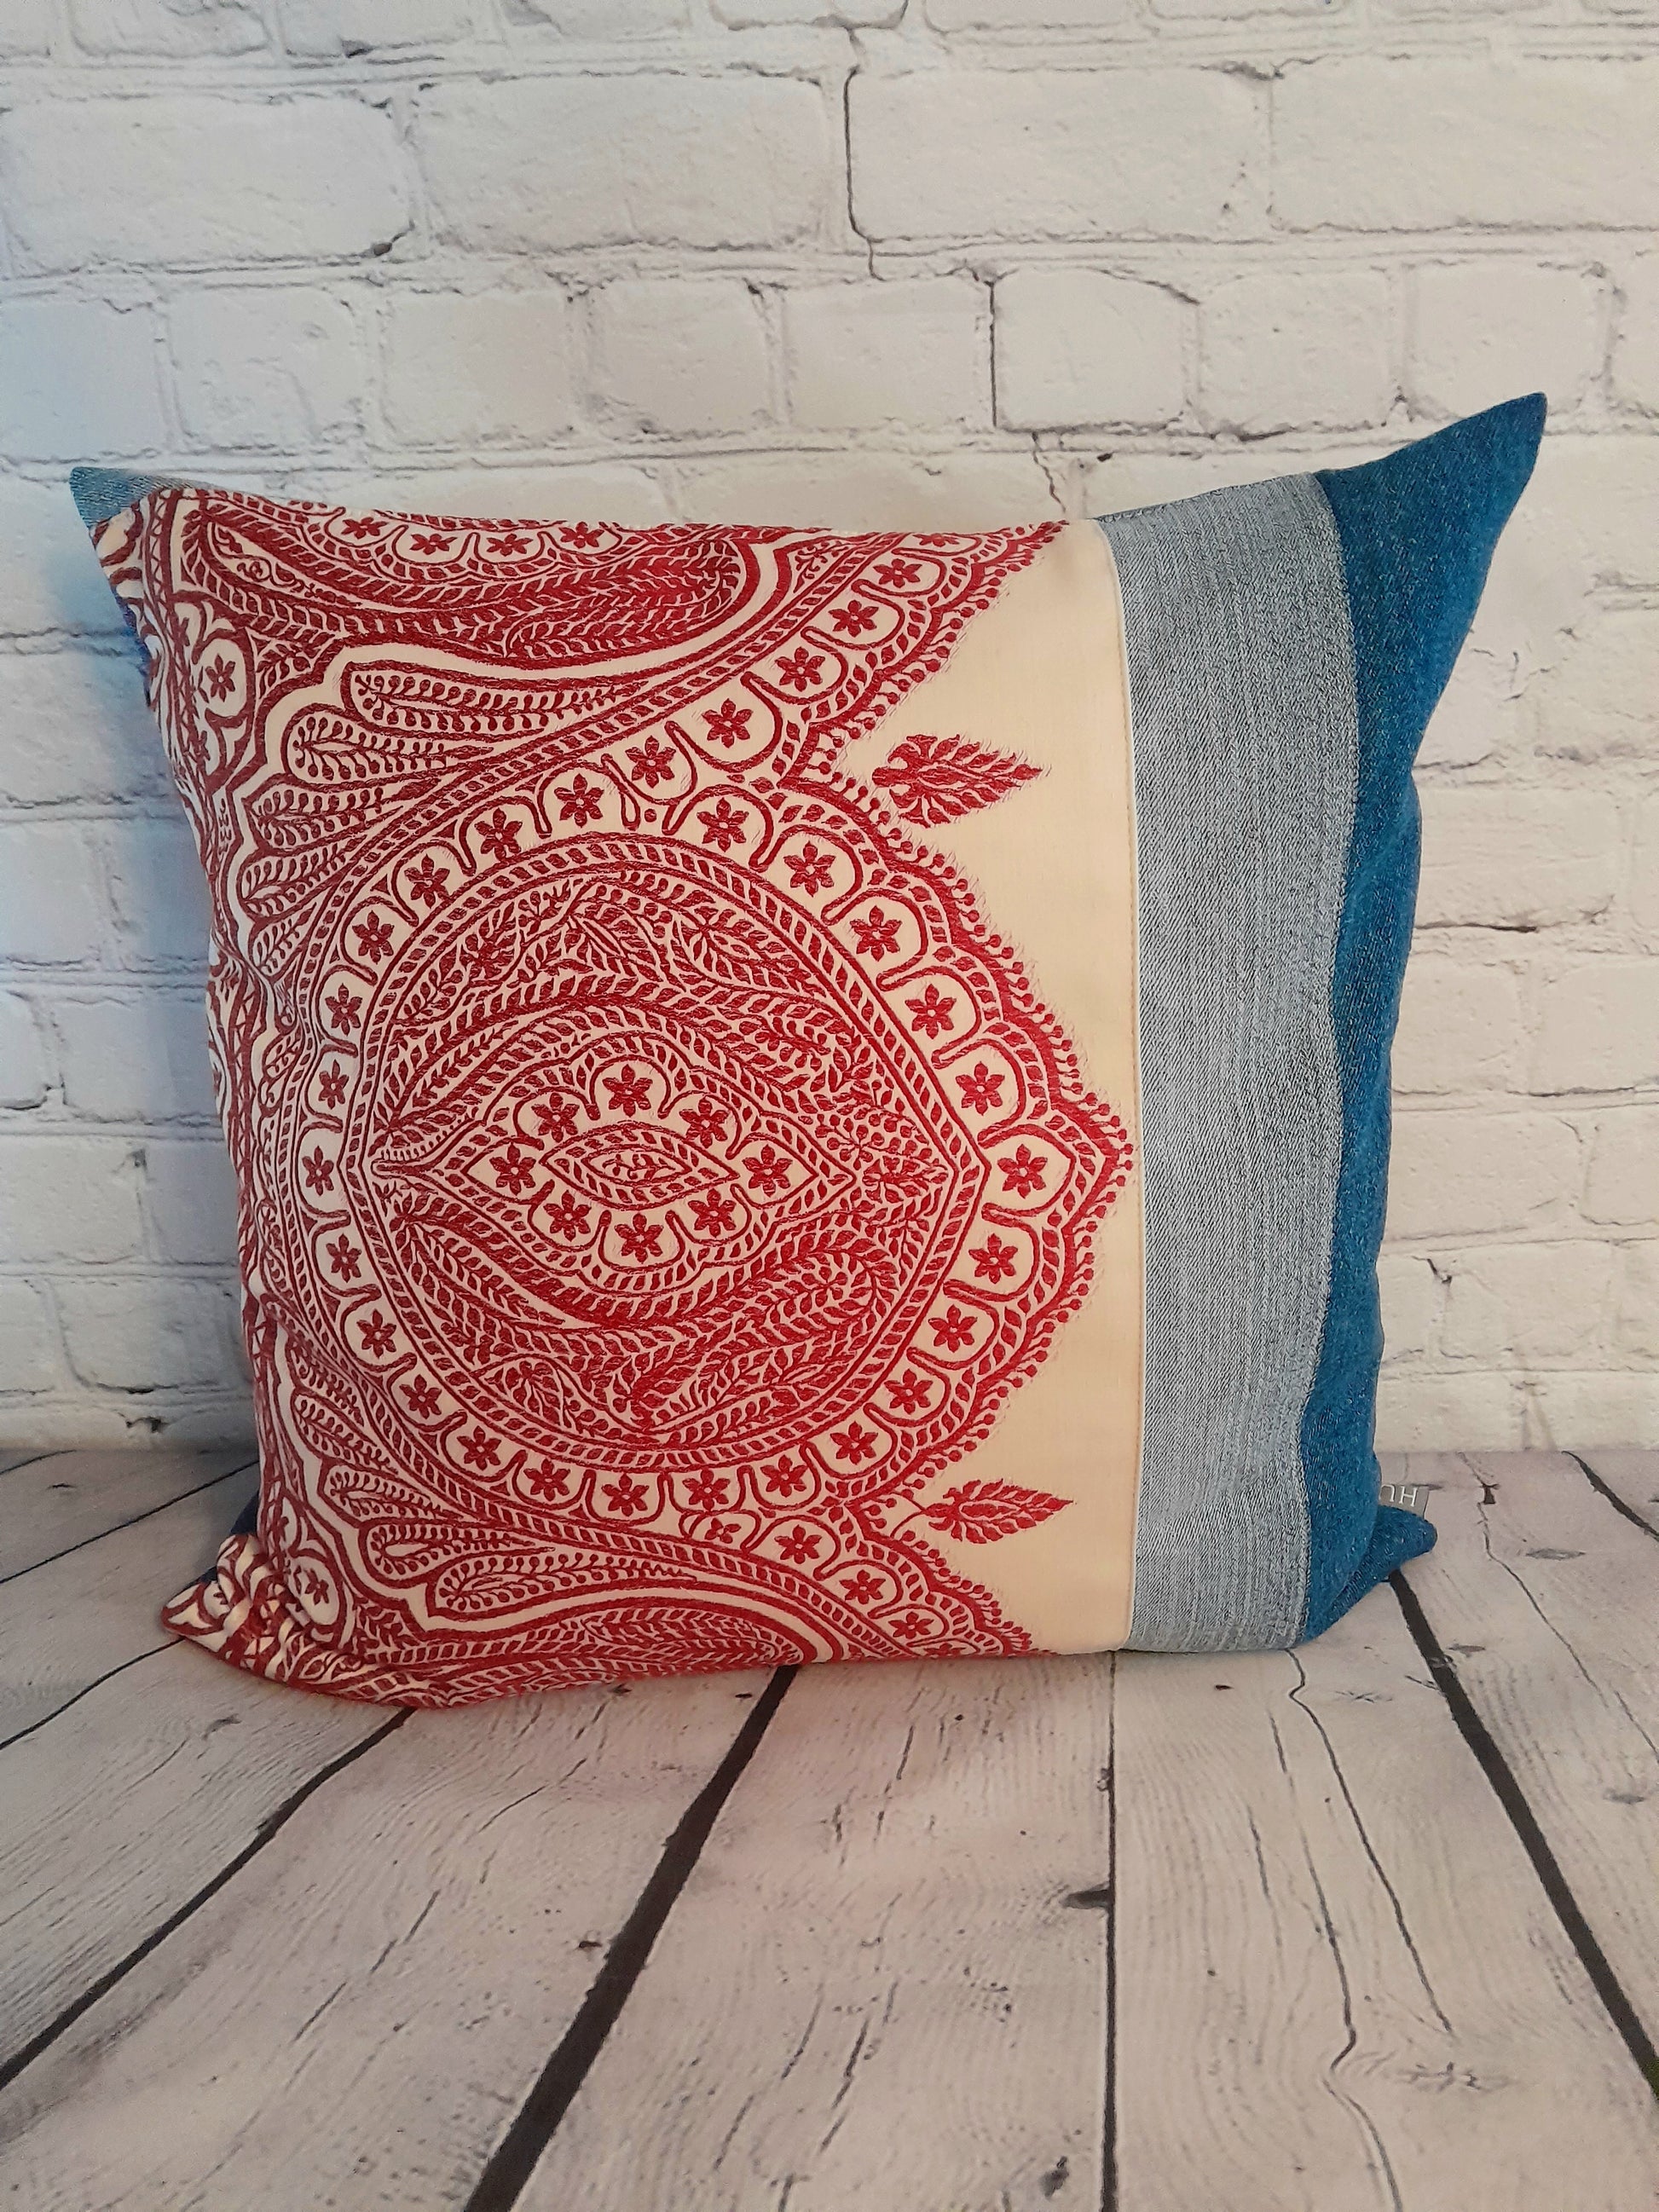 upcycled denim cushion with boho embroidery